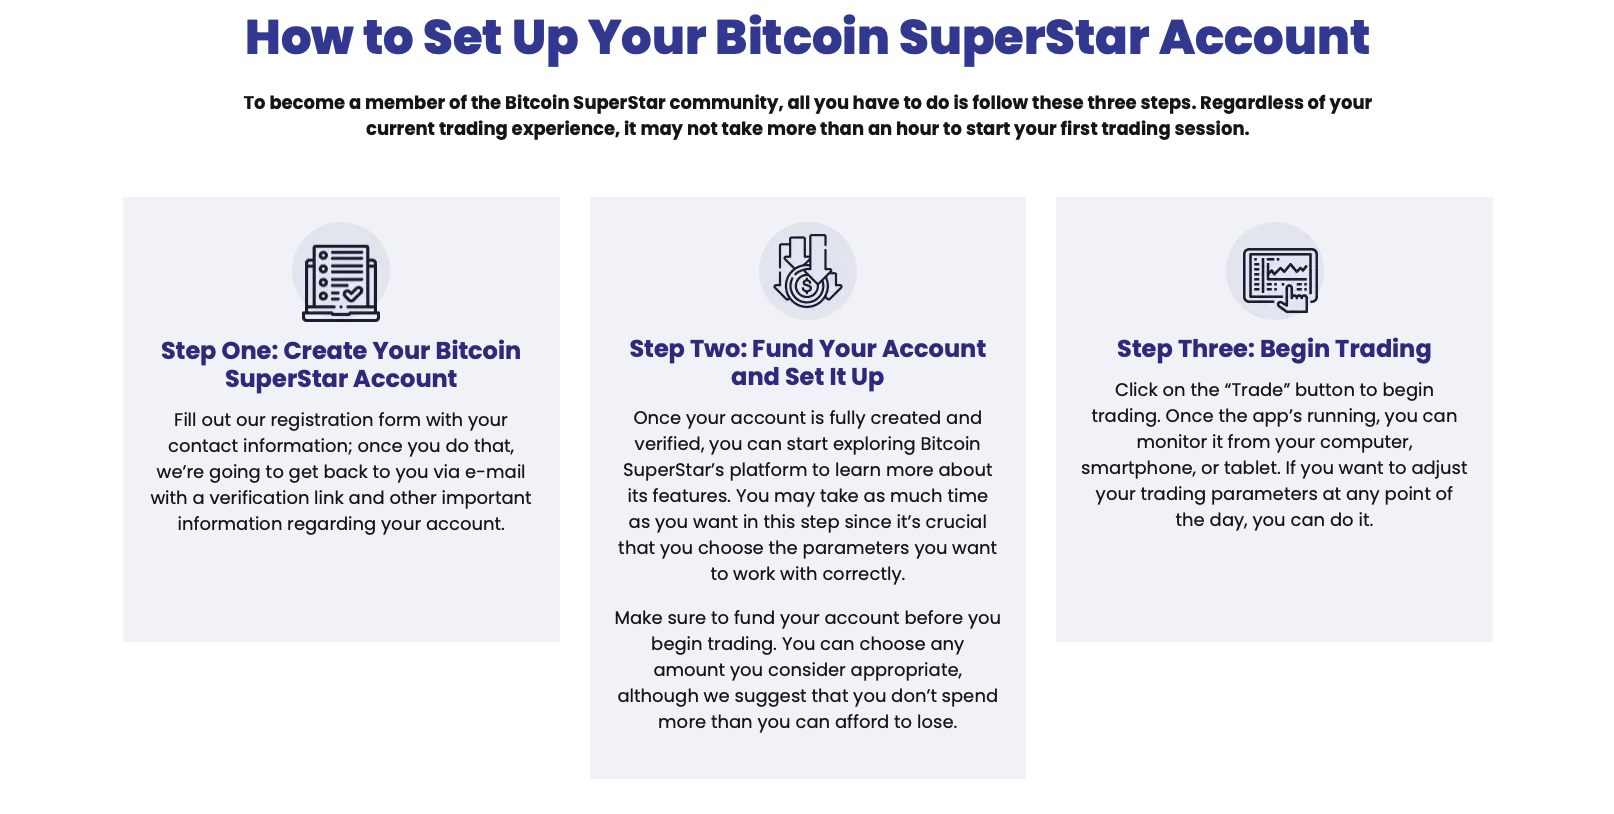 How to setup a Bitcoin superstar account